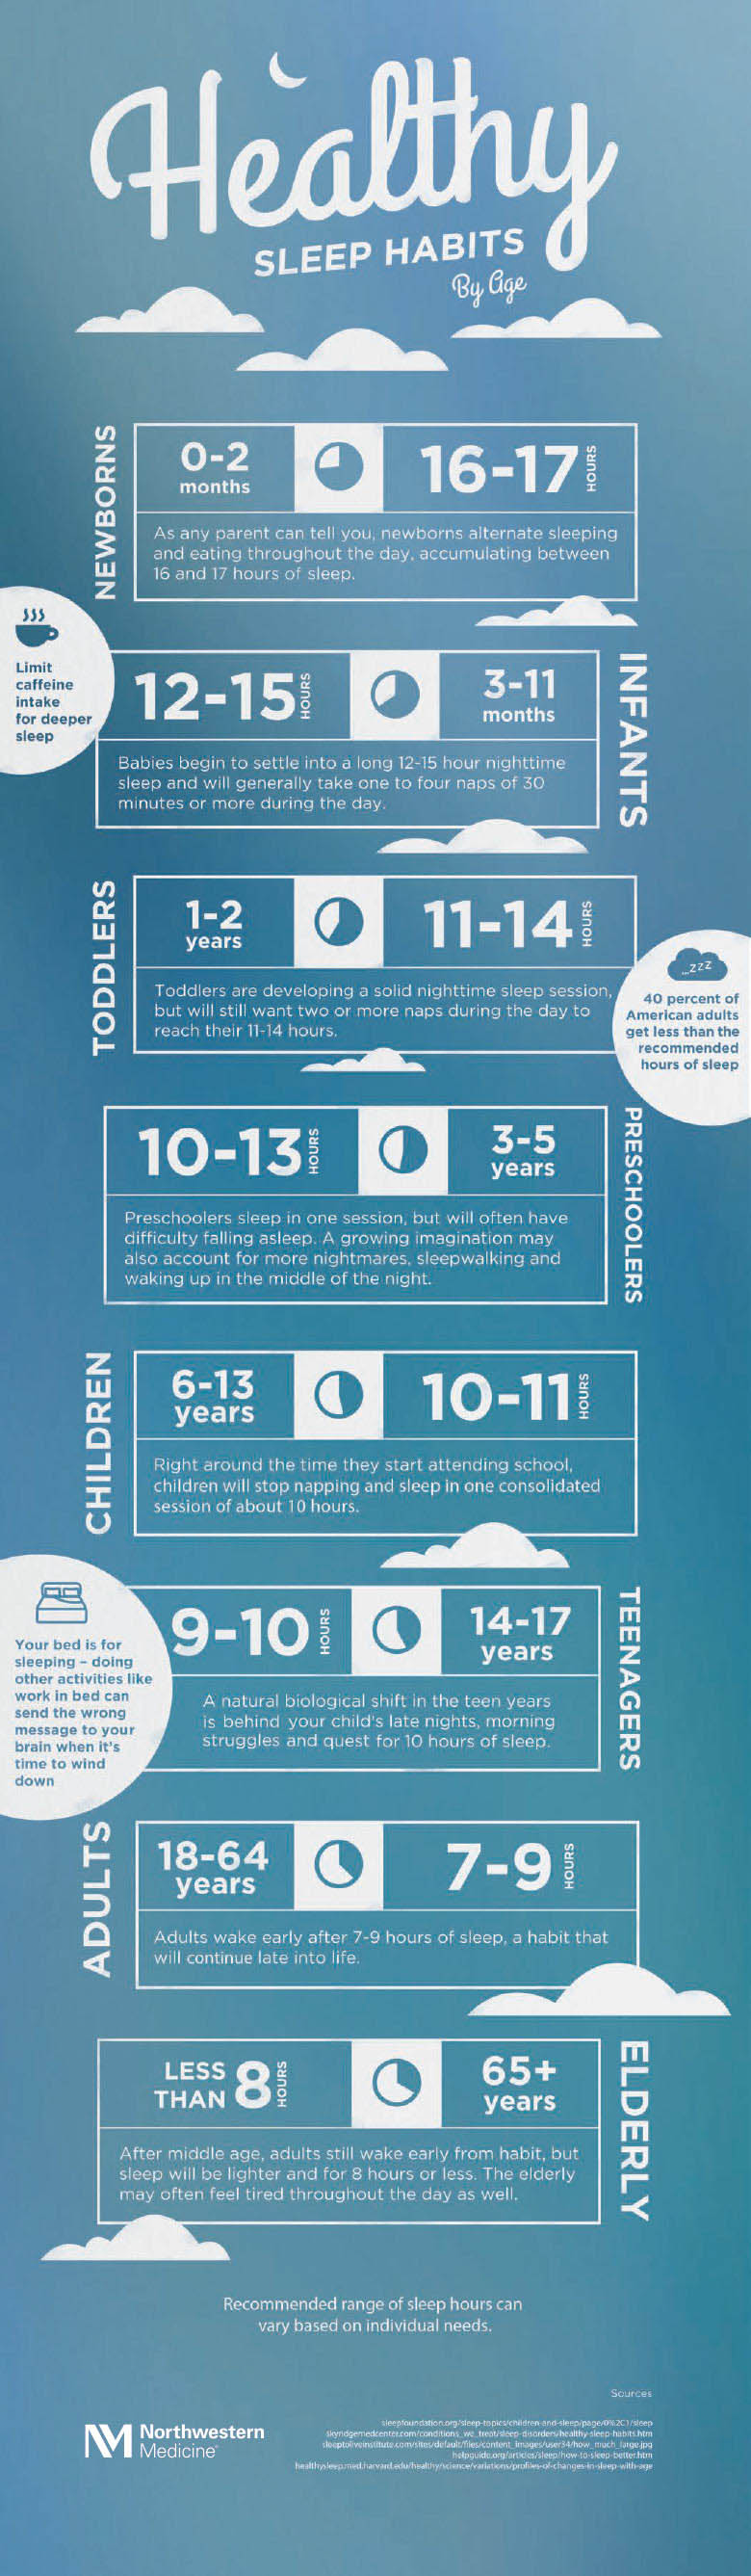 healthy sleep habits infographic